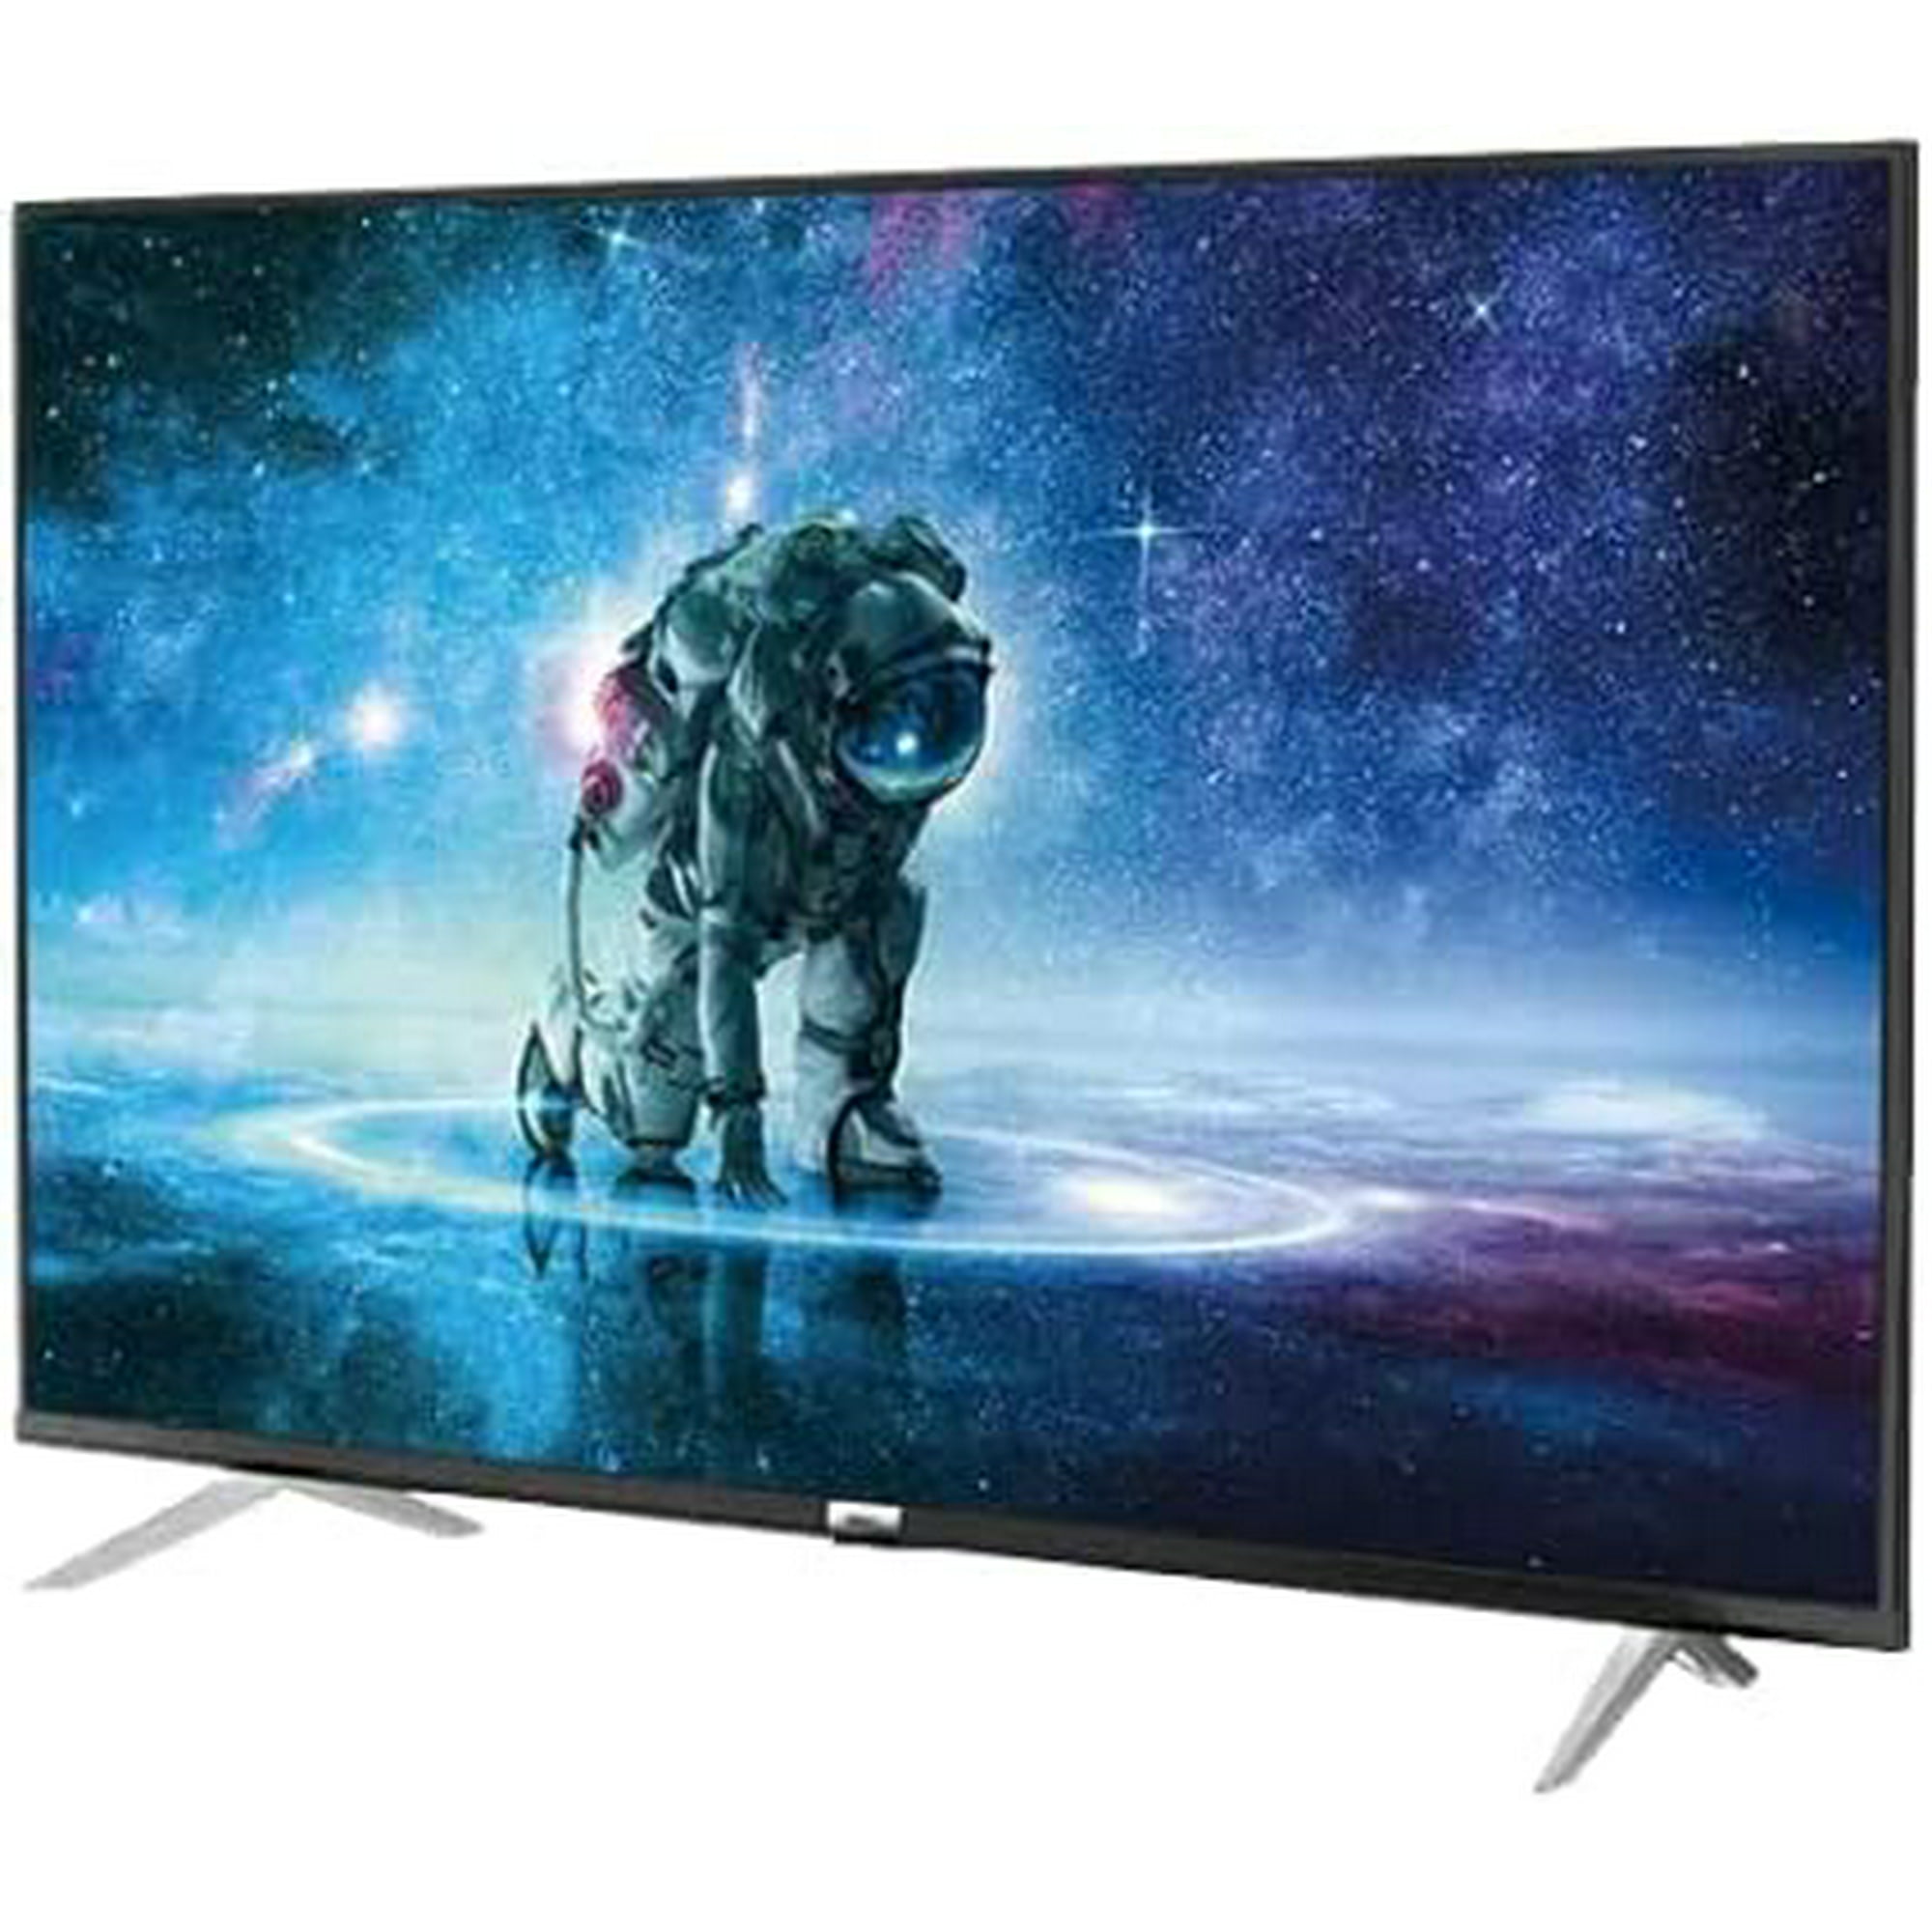 Pantalla Smart TV TCL LED de 50 pulgadas 4K/UHD 50S443 con Roku TV